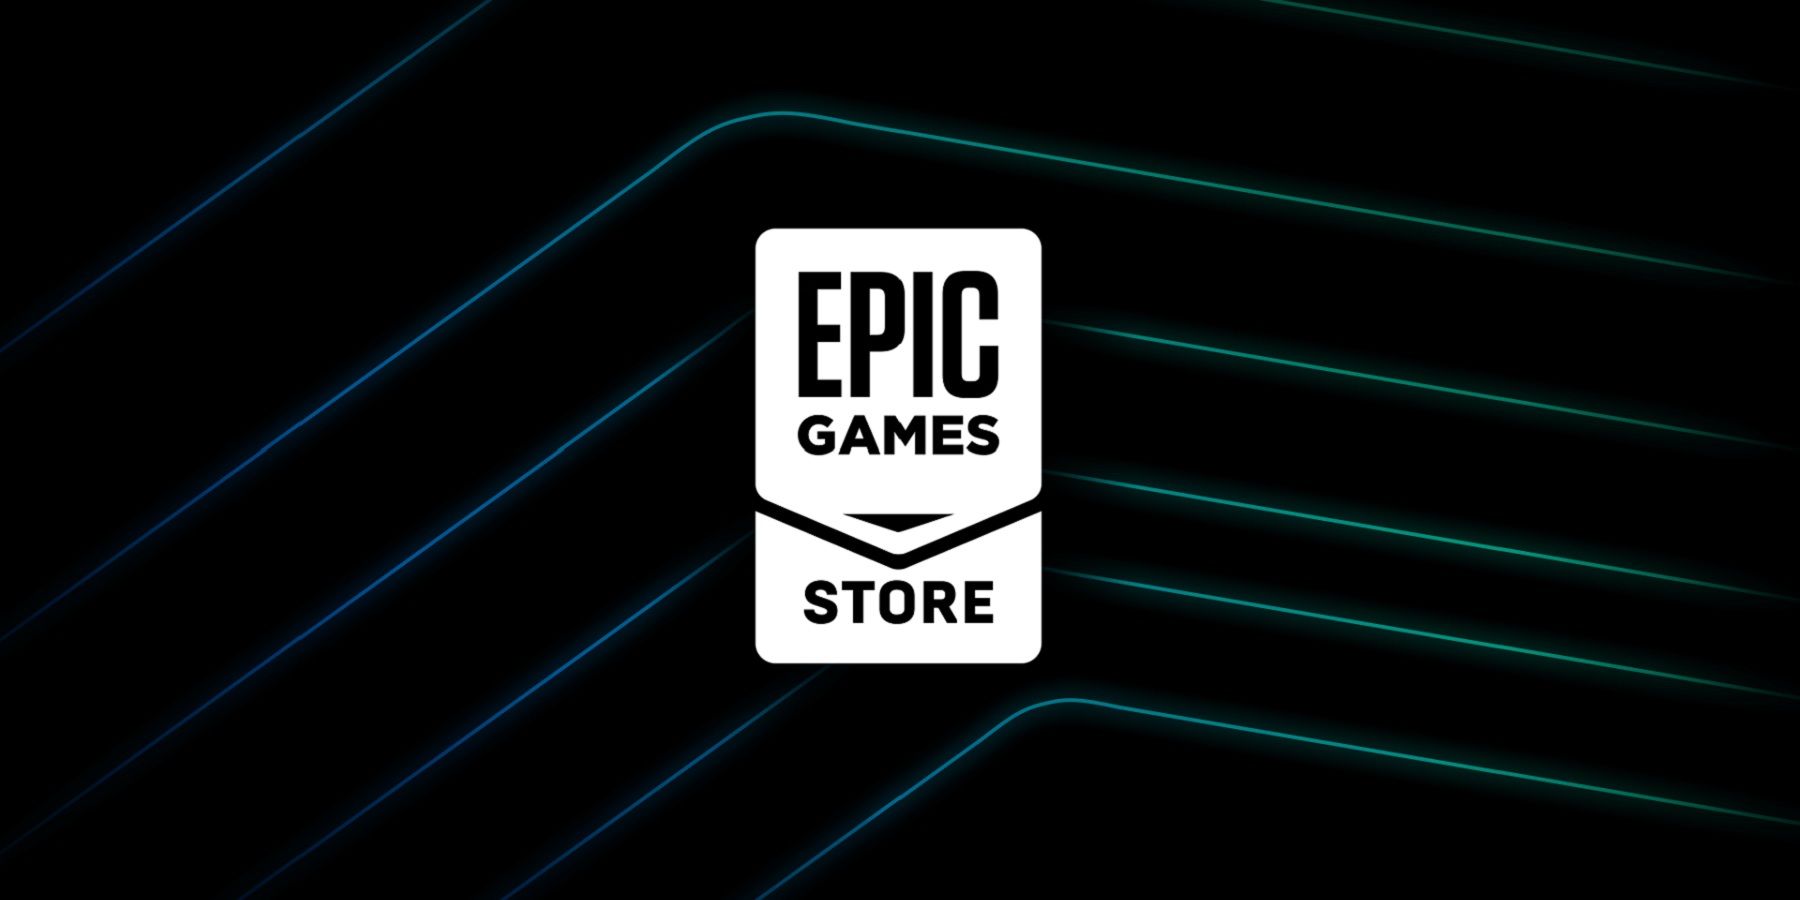 epic games store logo black background